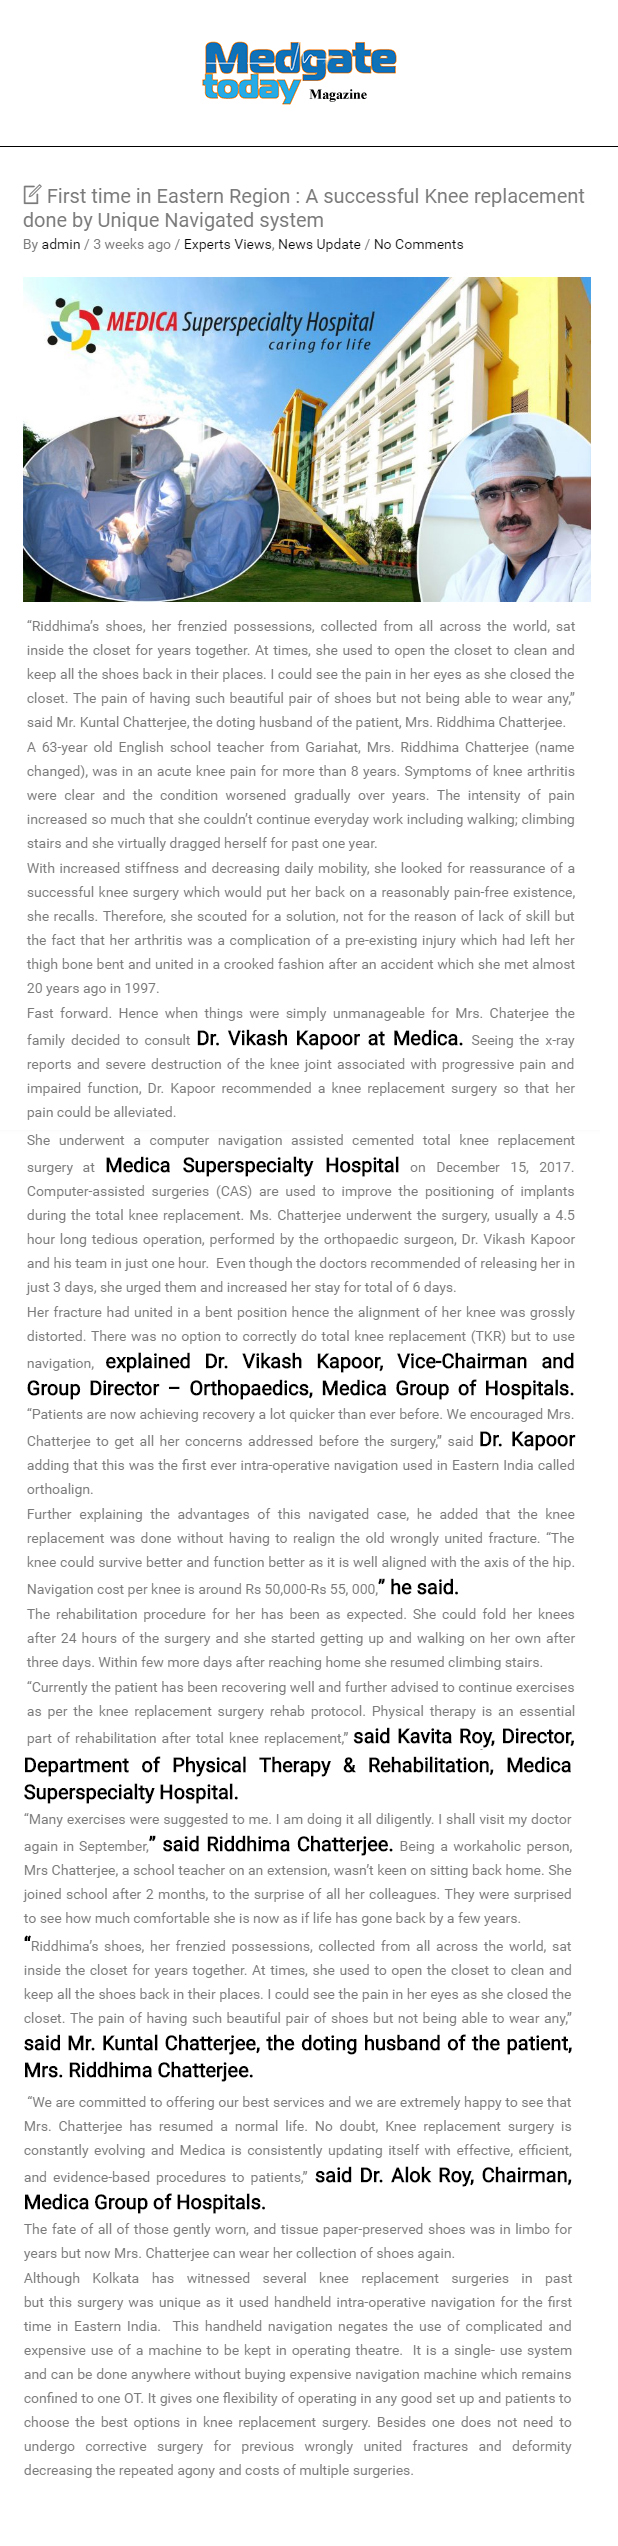 Dr. Vikash Kapoor Press Review